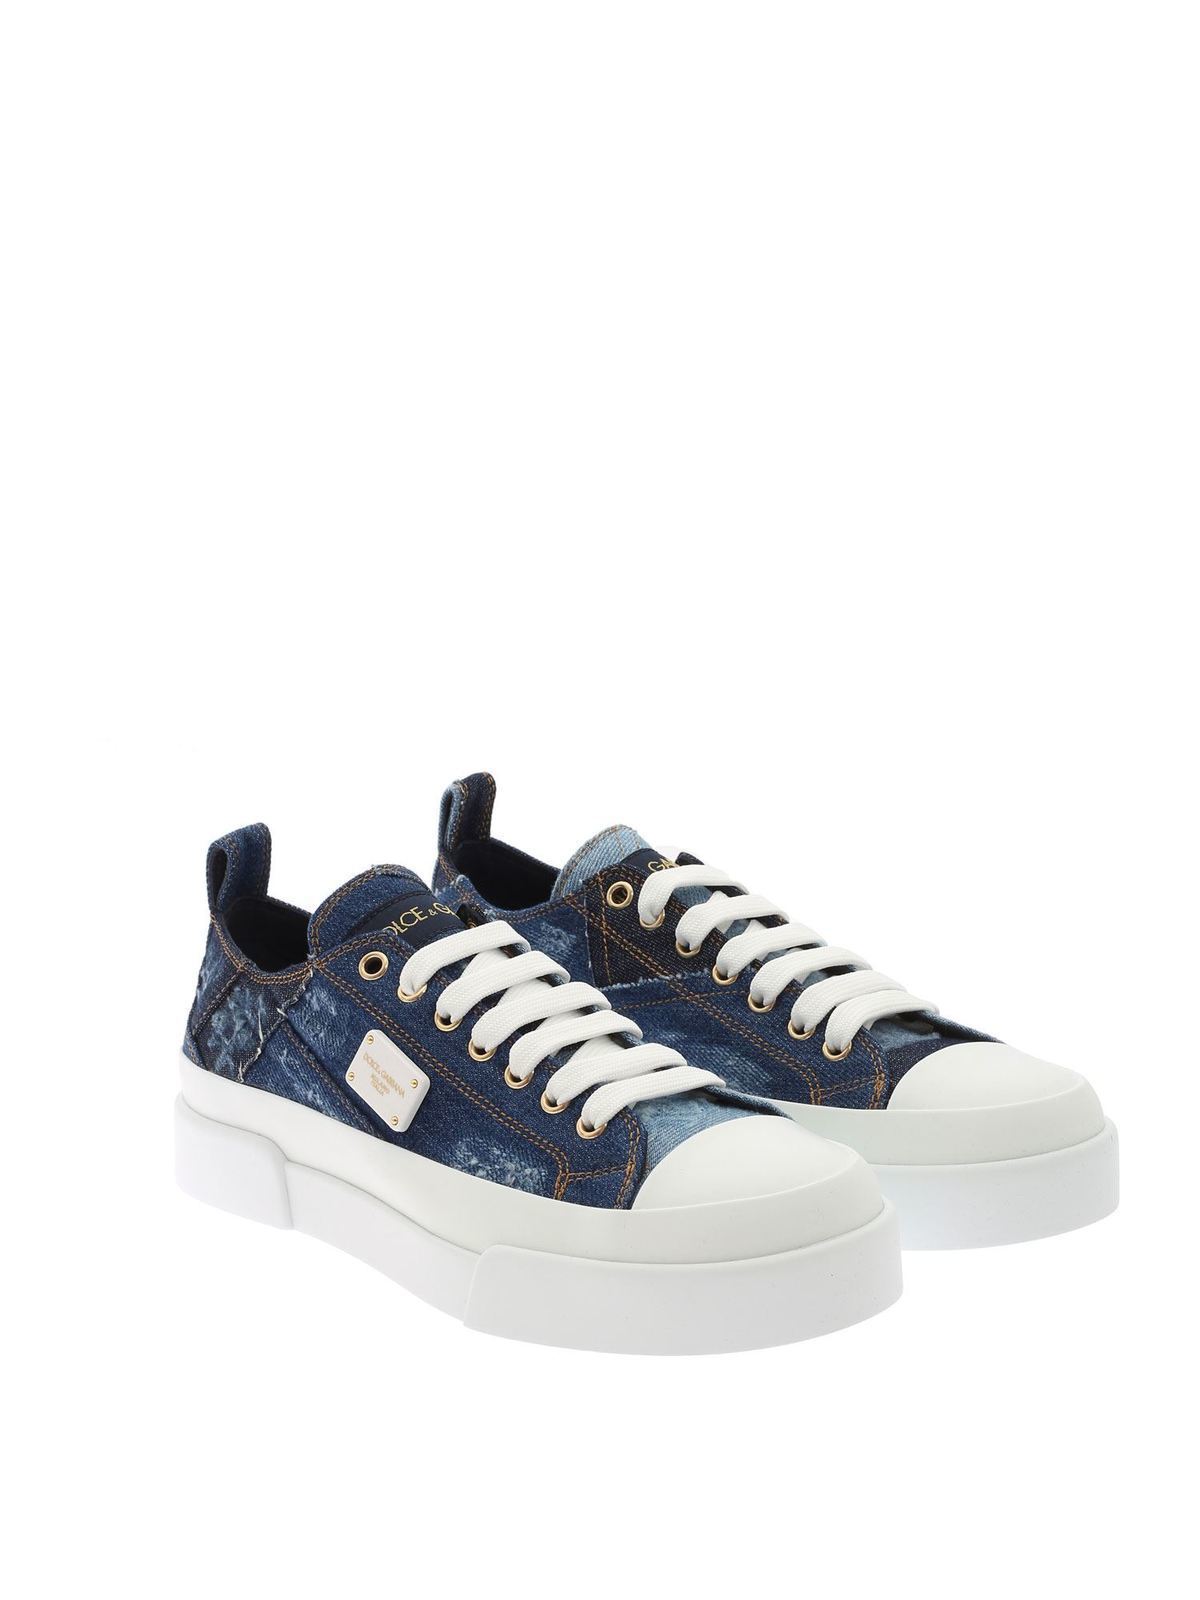 Dolce & Gabbana Portofino Denim Sneakers in Blue